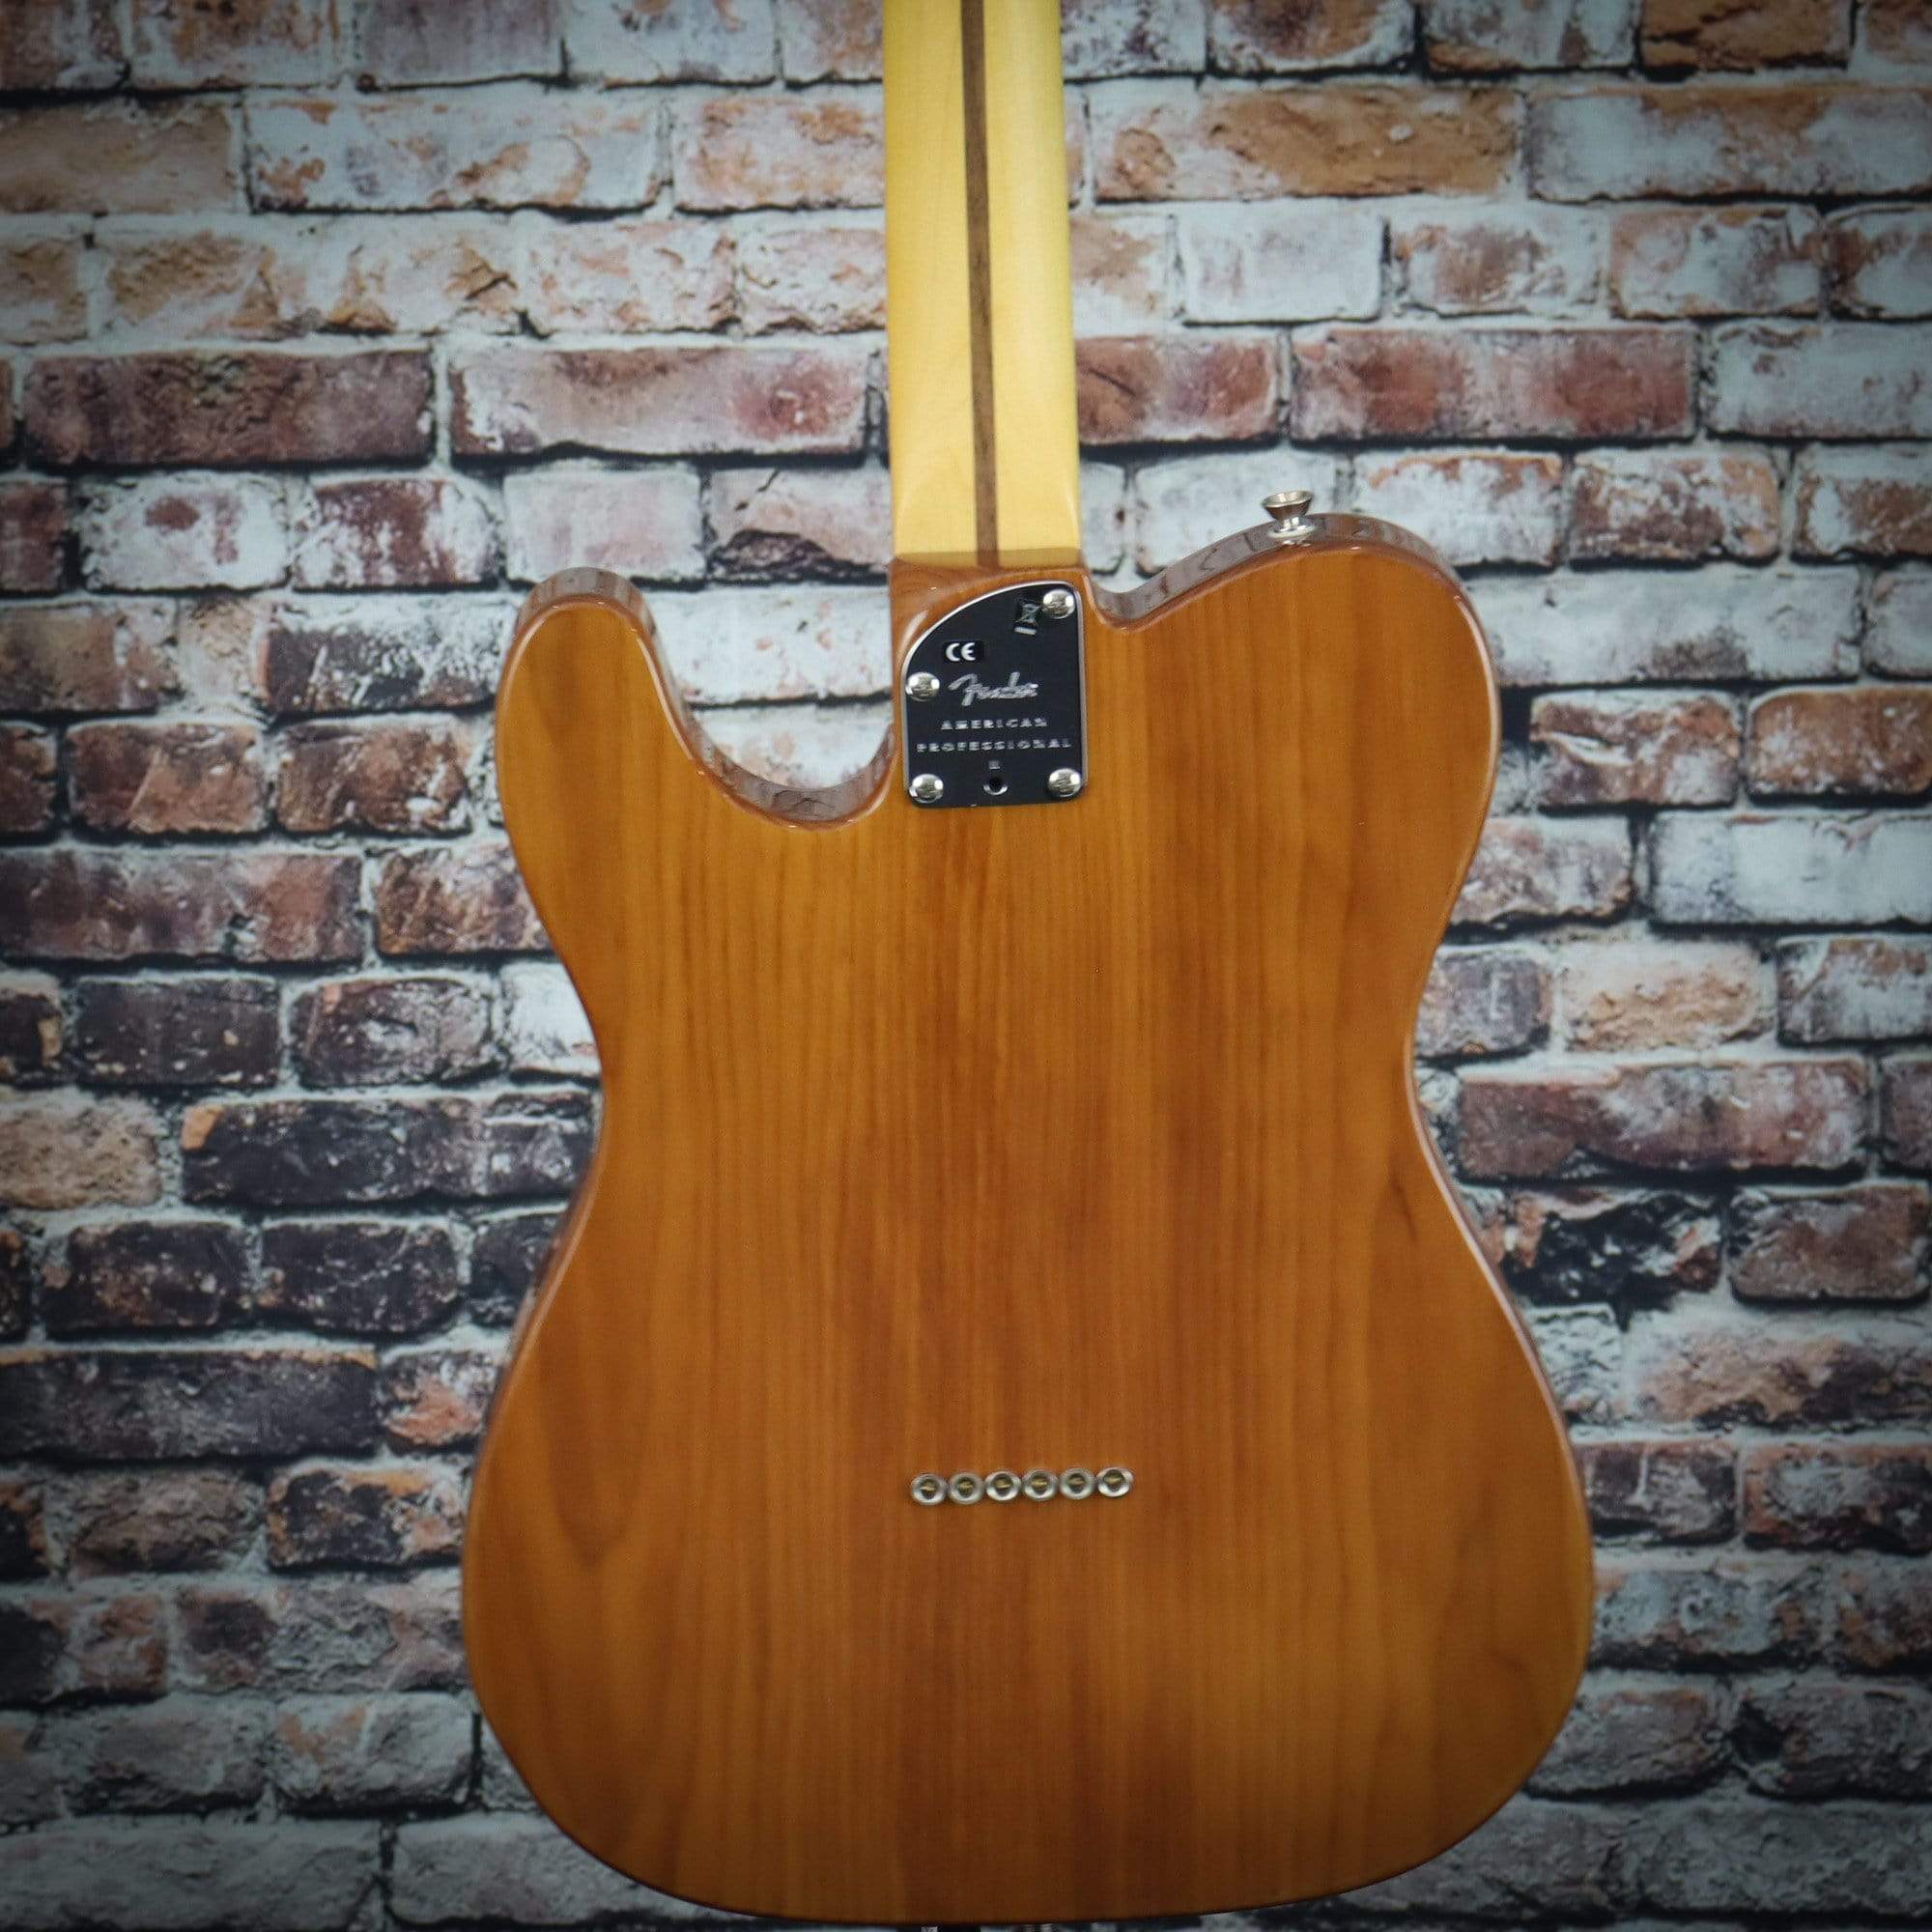 Fender American Professional II Telecaster | Roasted Pine